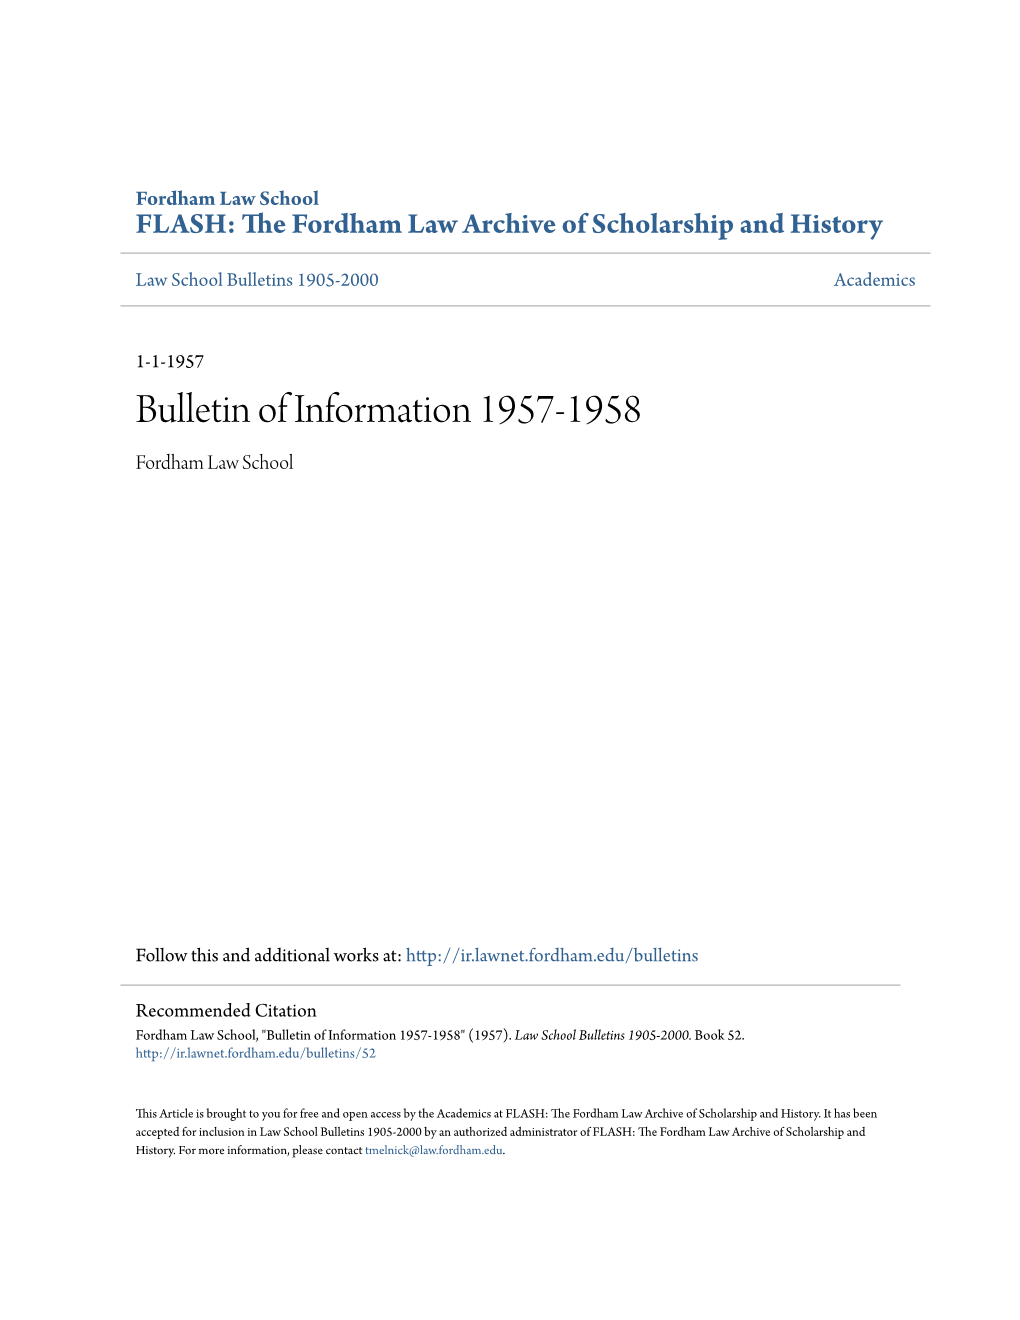 Bulletin of Information 1957-1958 Fordham Law School